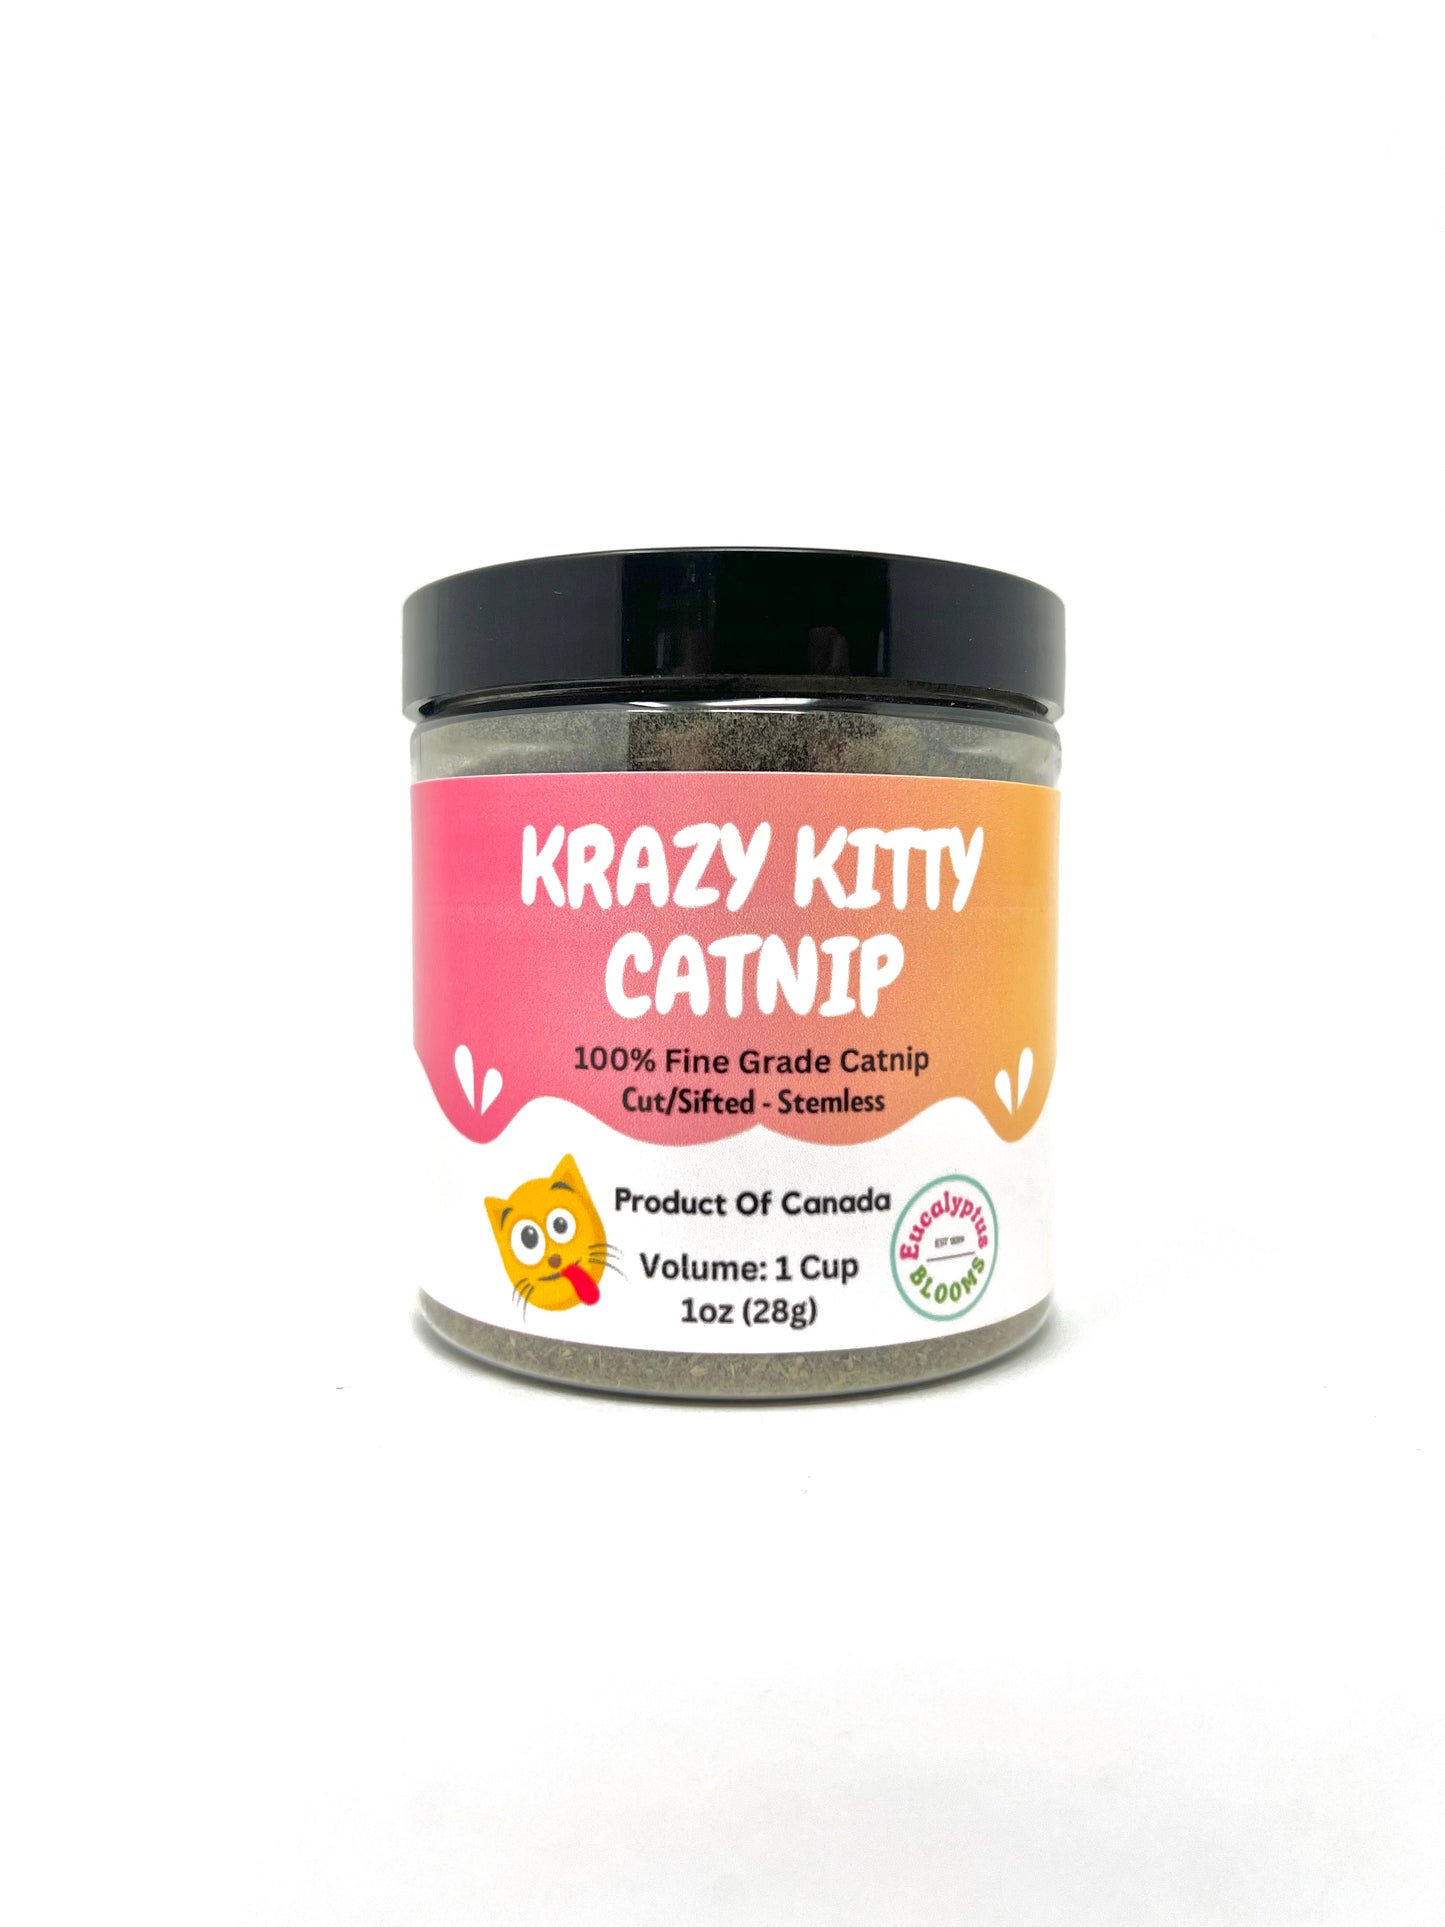 Krazy Kitty Catnip